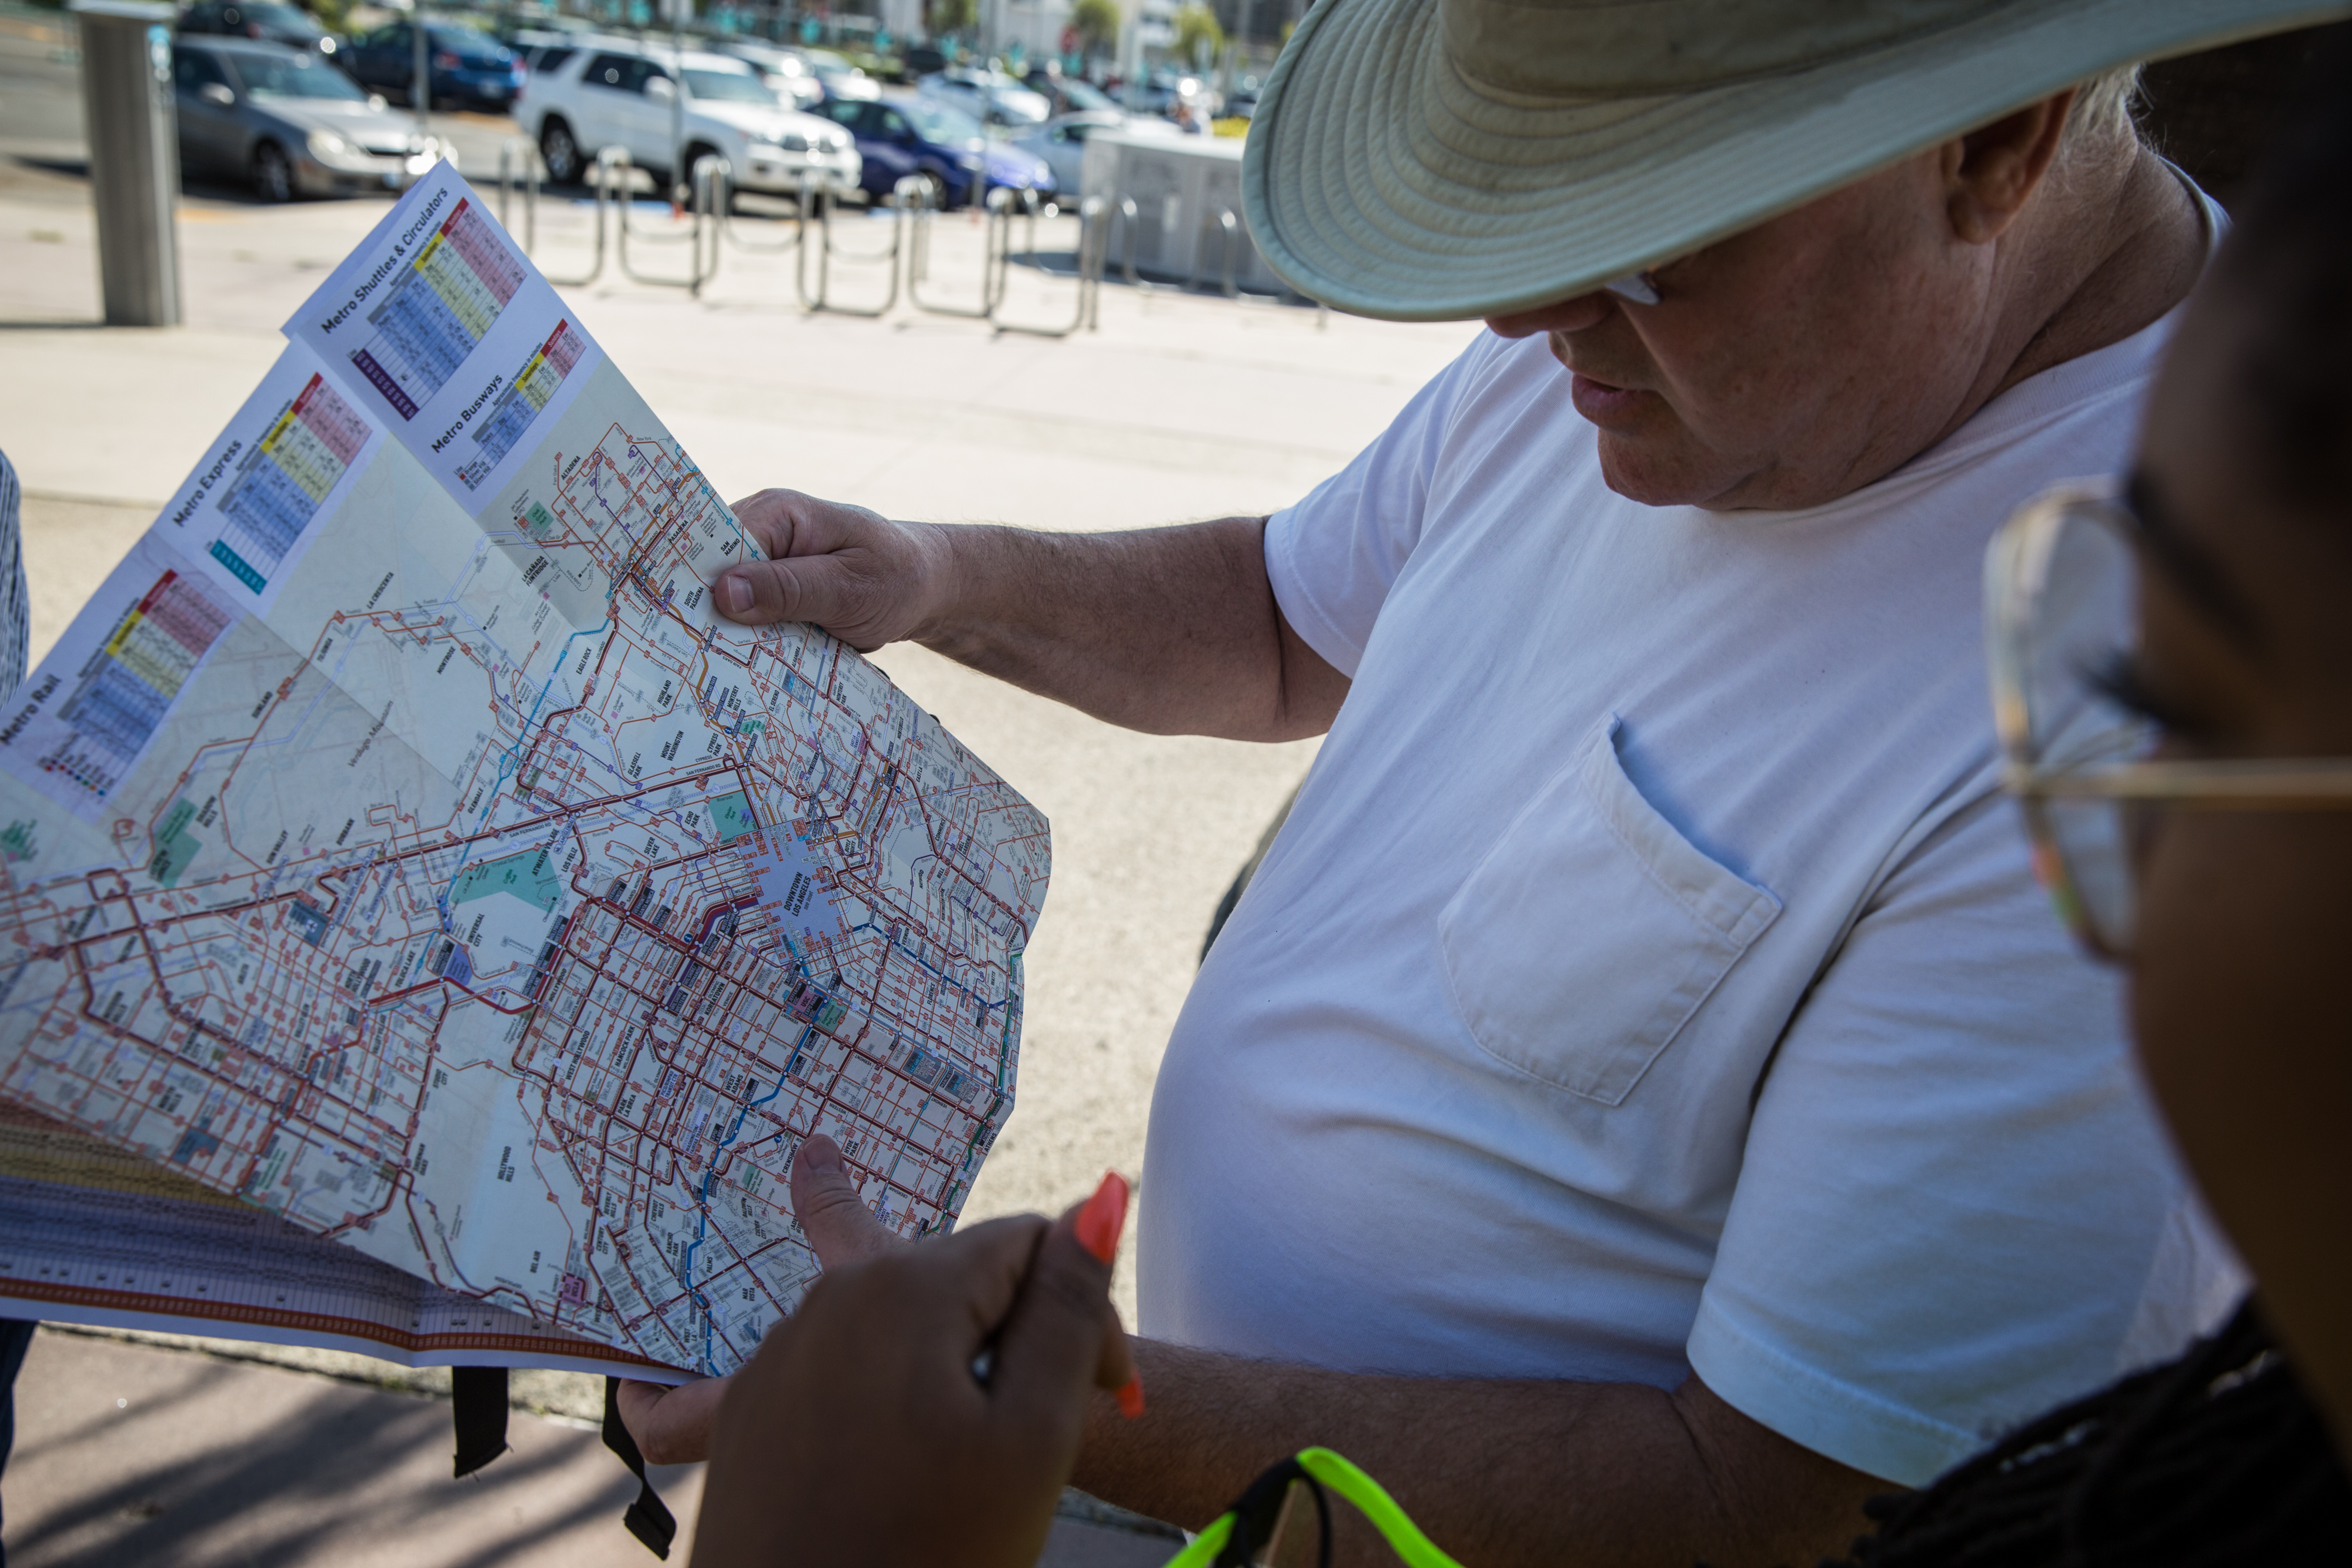 Man examining bus map